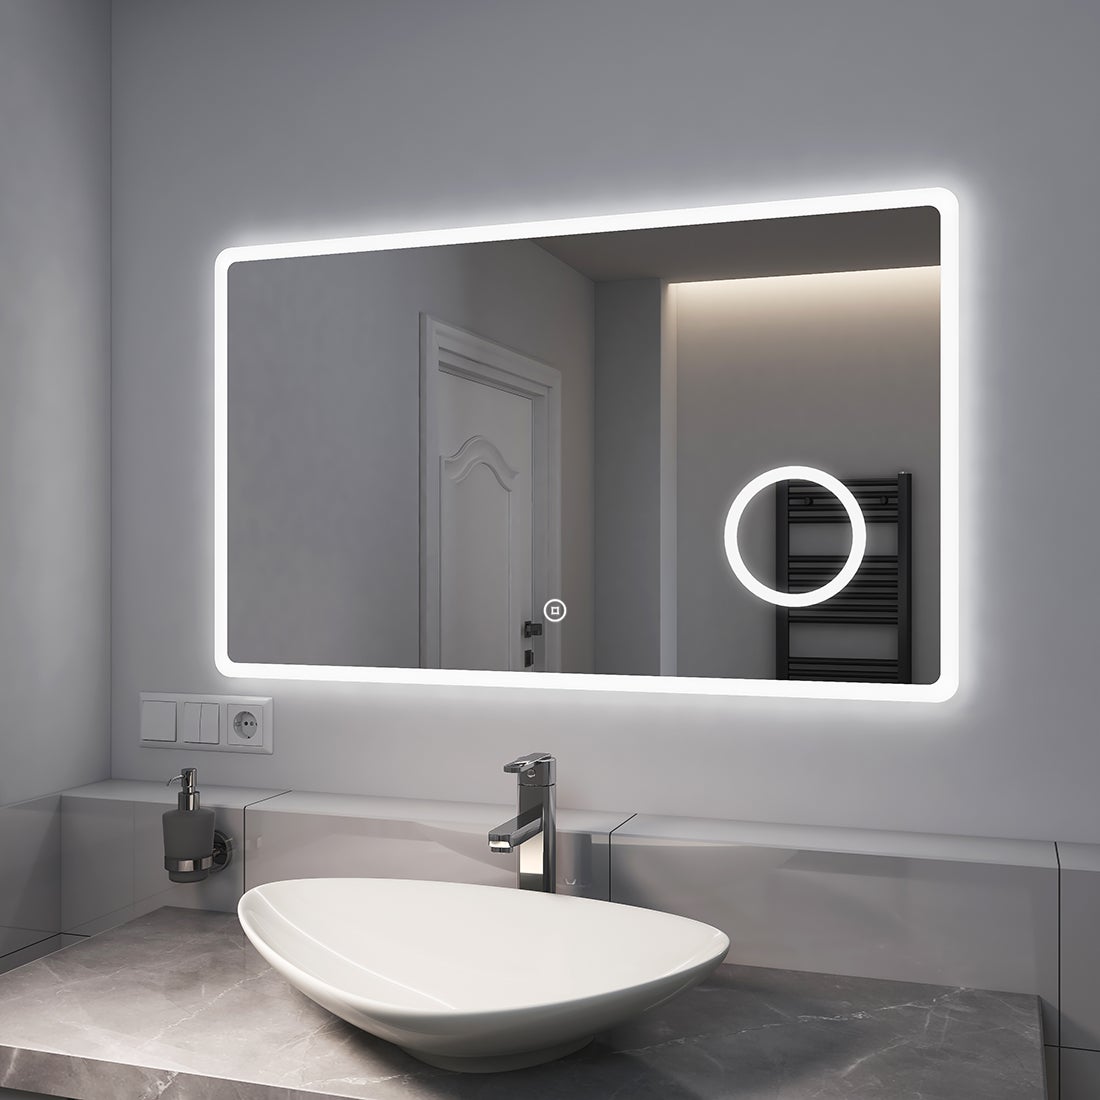 EMKE Badspiegel mit 3-fache Vergrößerung, LED Beleuchtung, 100x60cm, 3 Lichtfarben Dimmbar, Touch